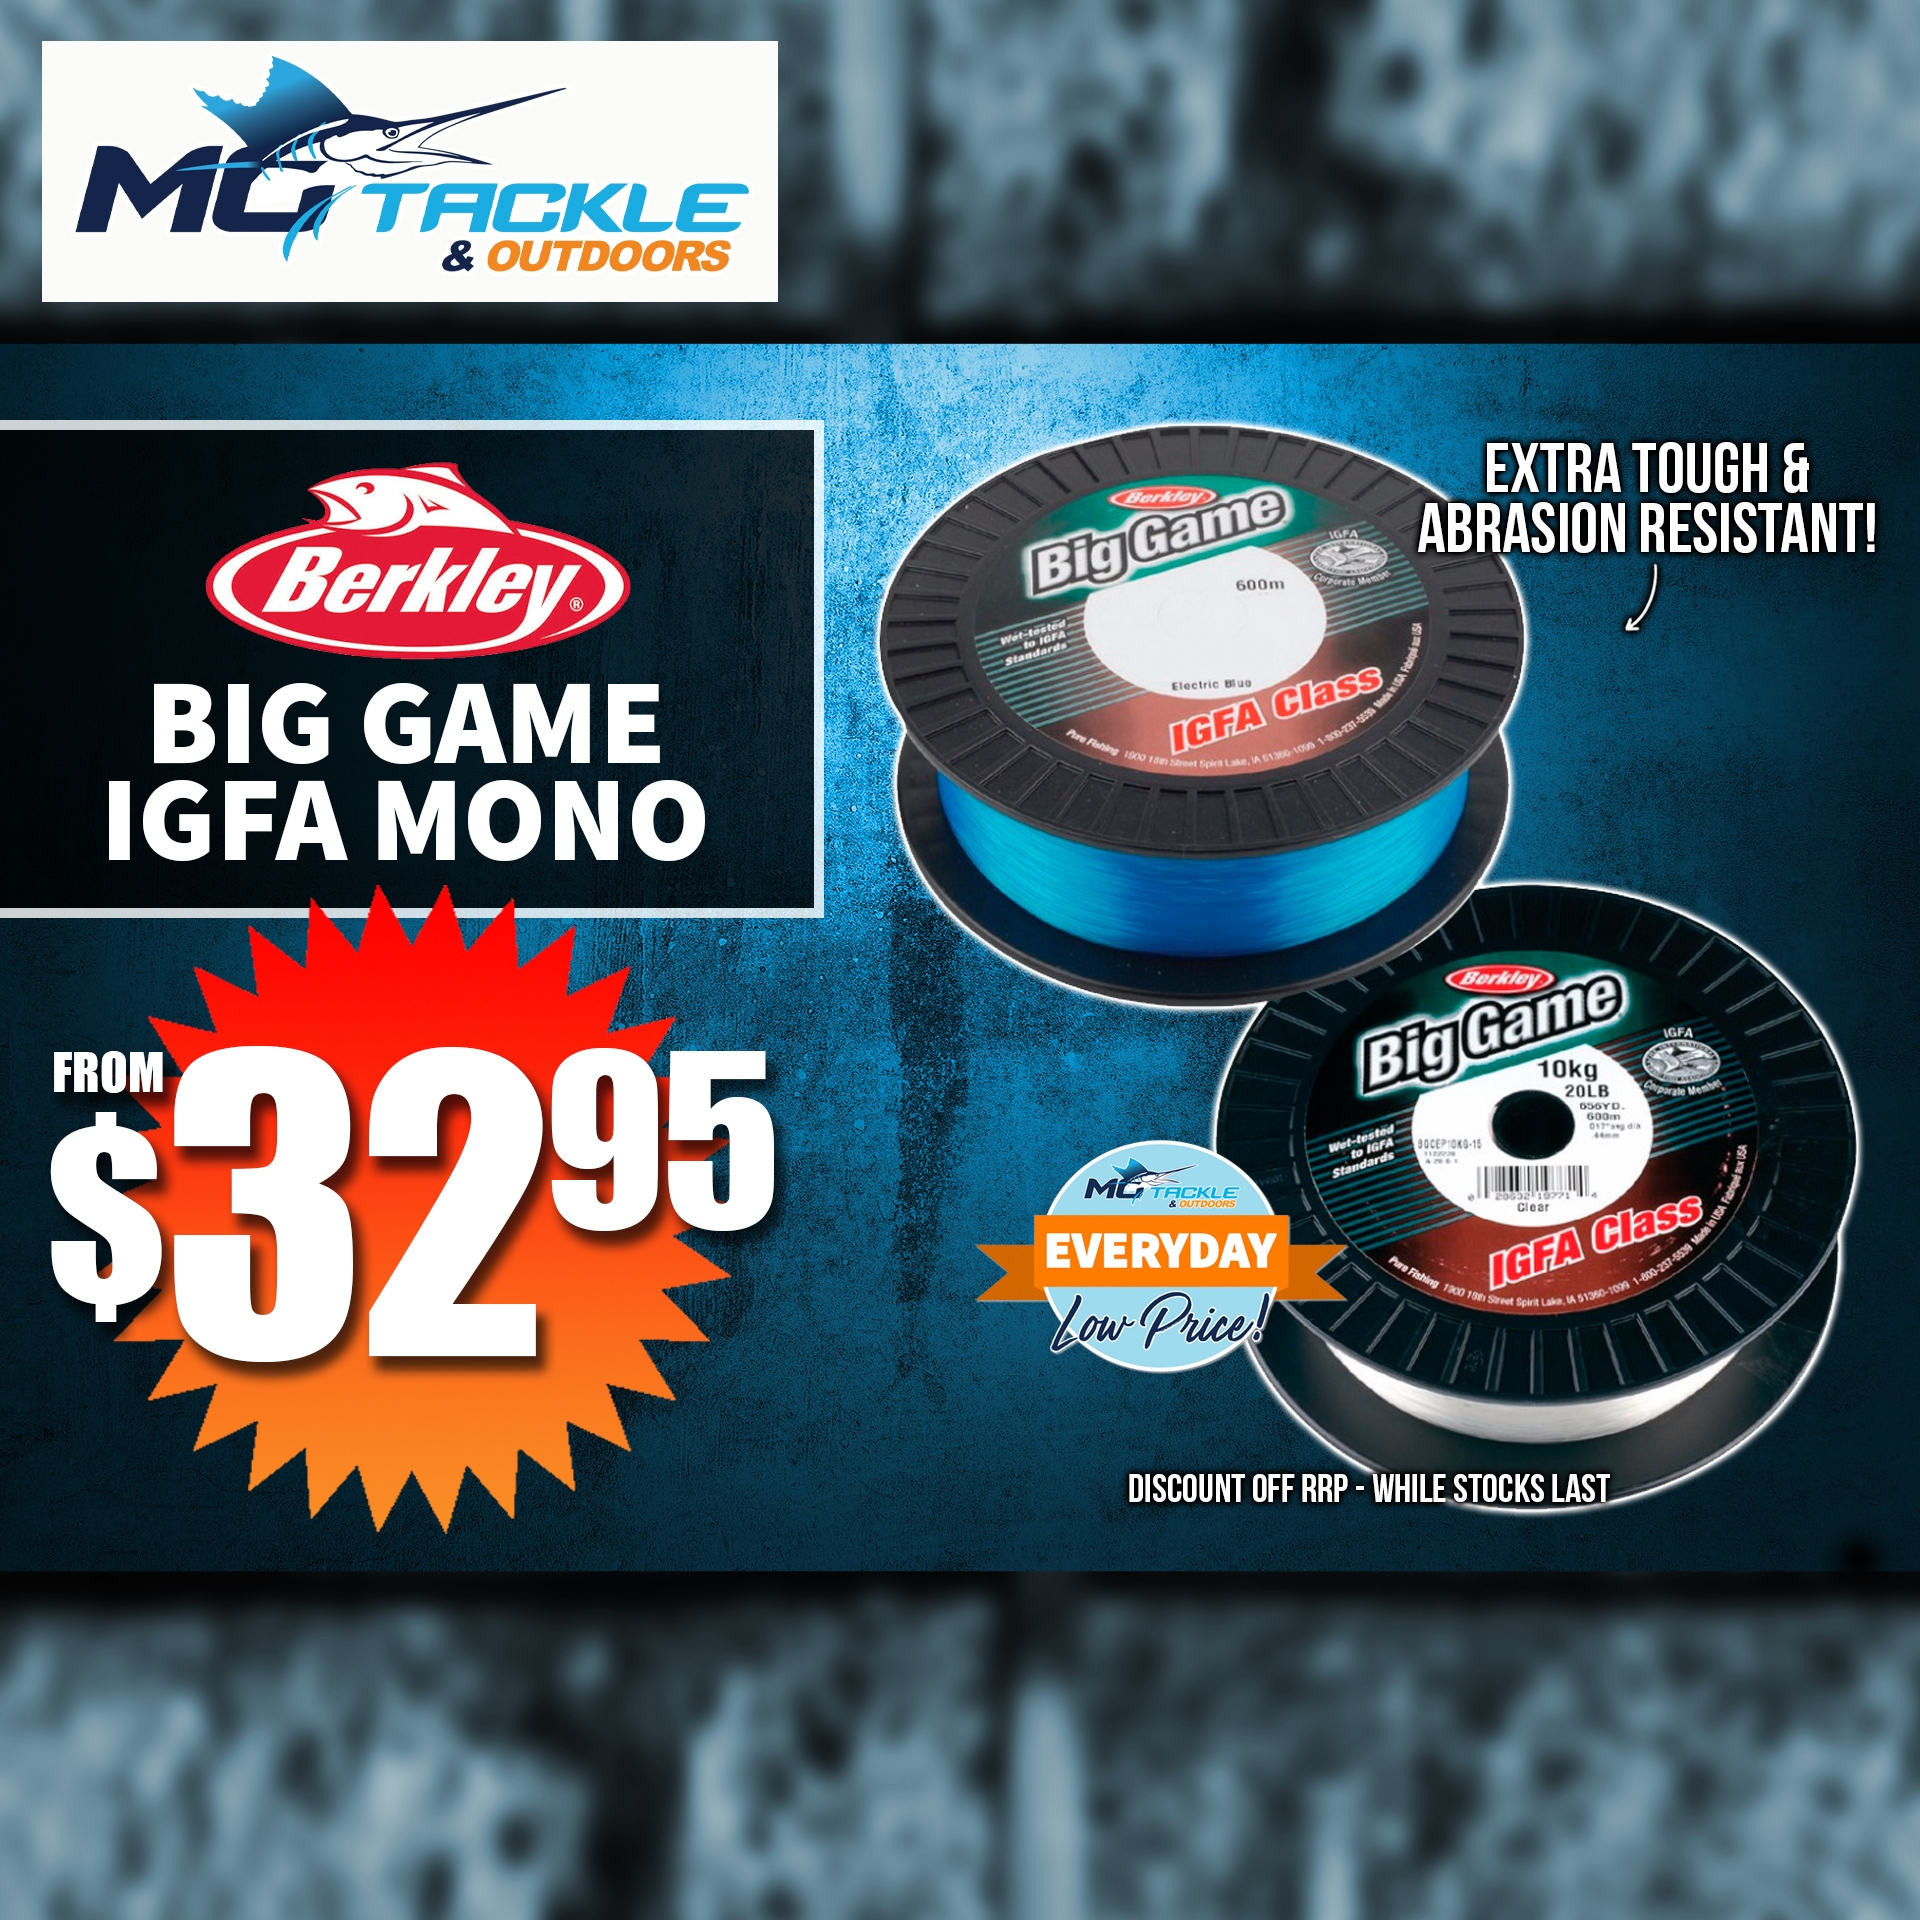 Berkley Big Game IGFA Mono from $32.95